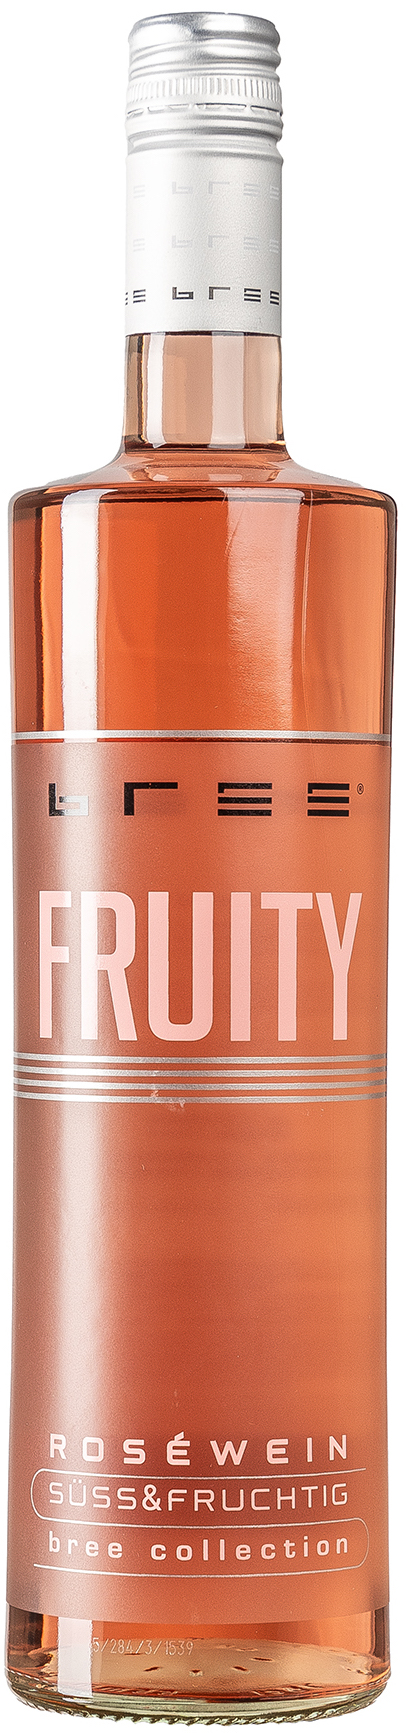 Bree Fruity rosé Süss und Fruchtig 9,0% vol. 0,75L